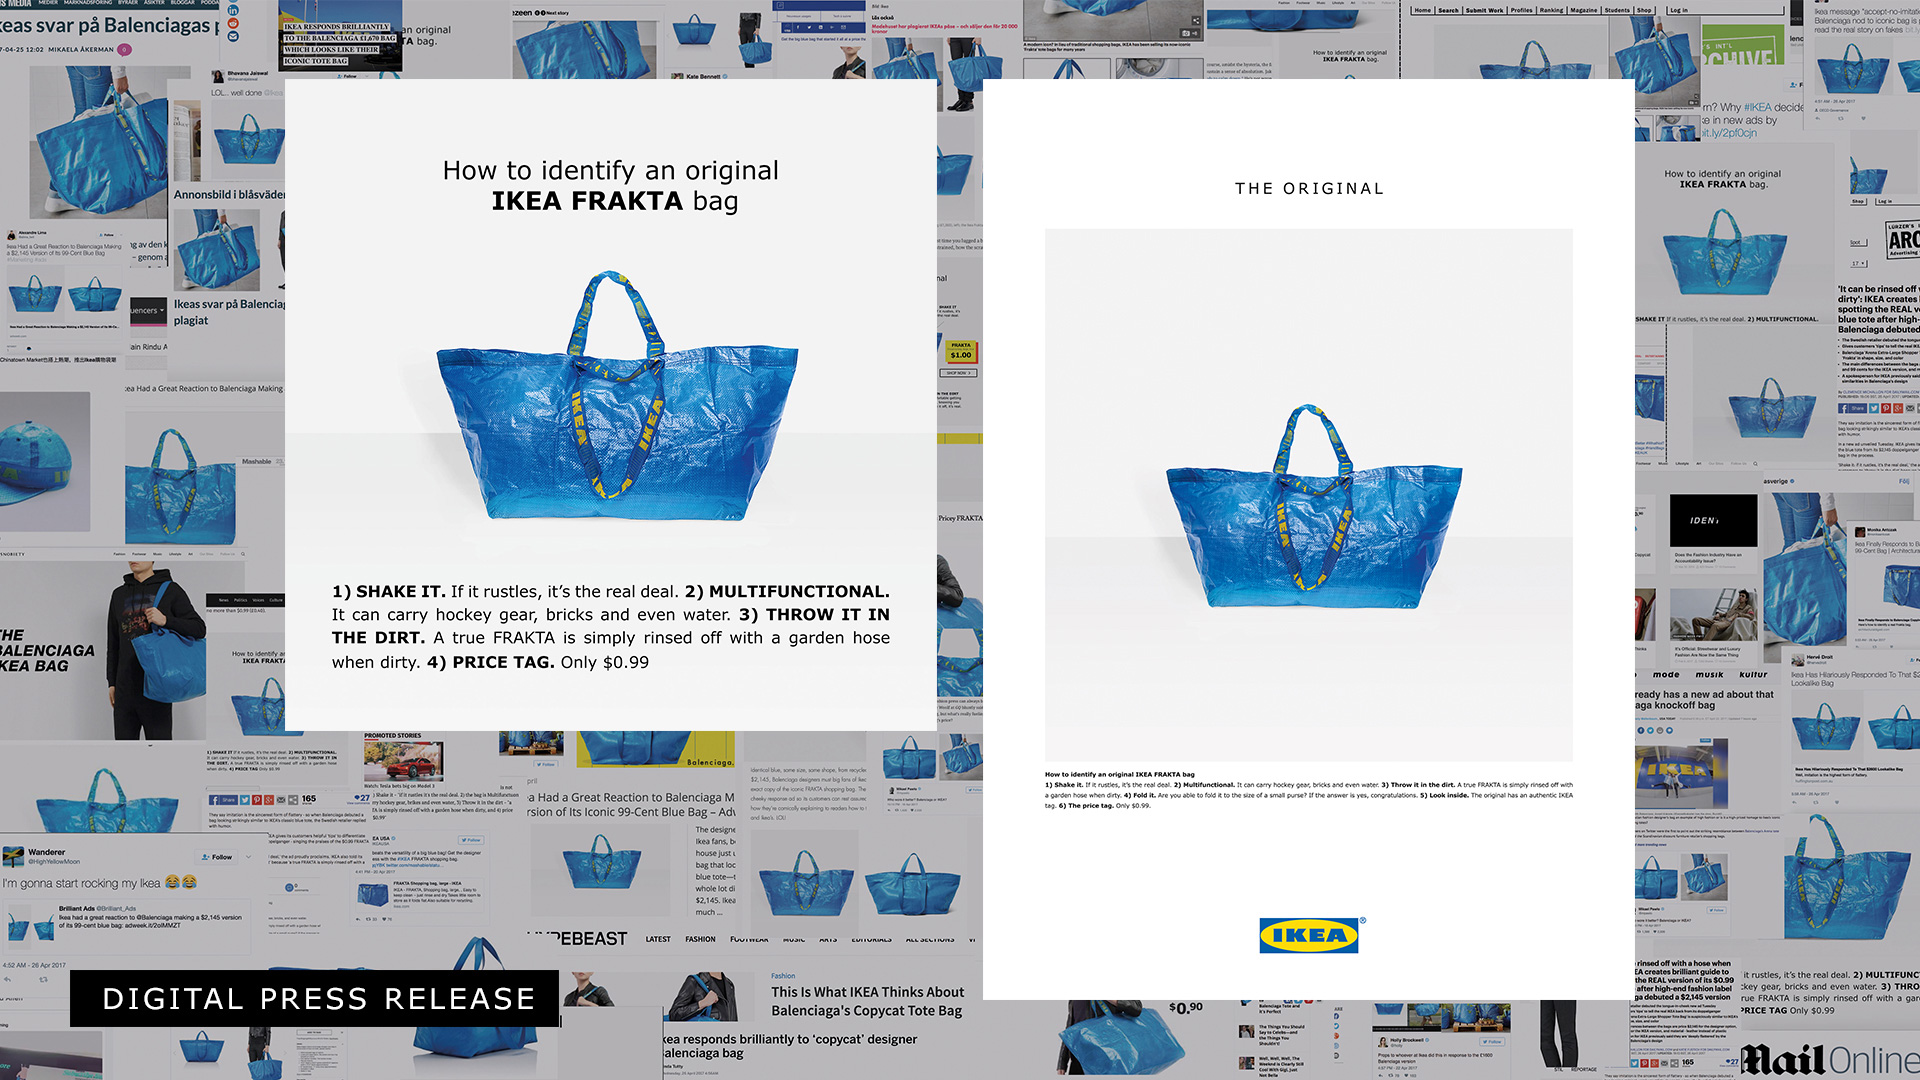 Erik Herrström on Twitter IKEA Responds to Balenciagas Copycat Tote Bag   httpstcouCGpjdtORx httpstcoslMIrokUto  Twitter